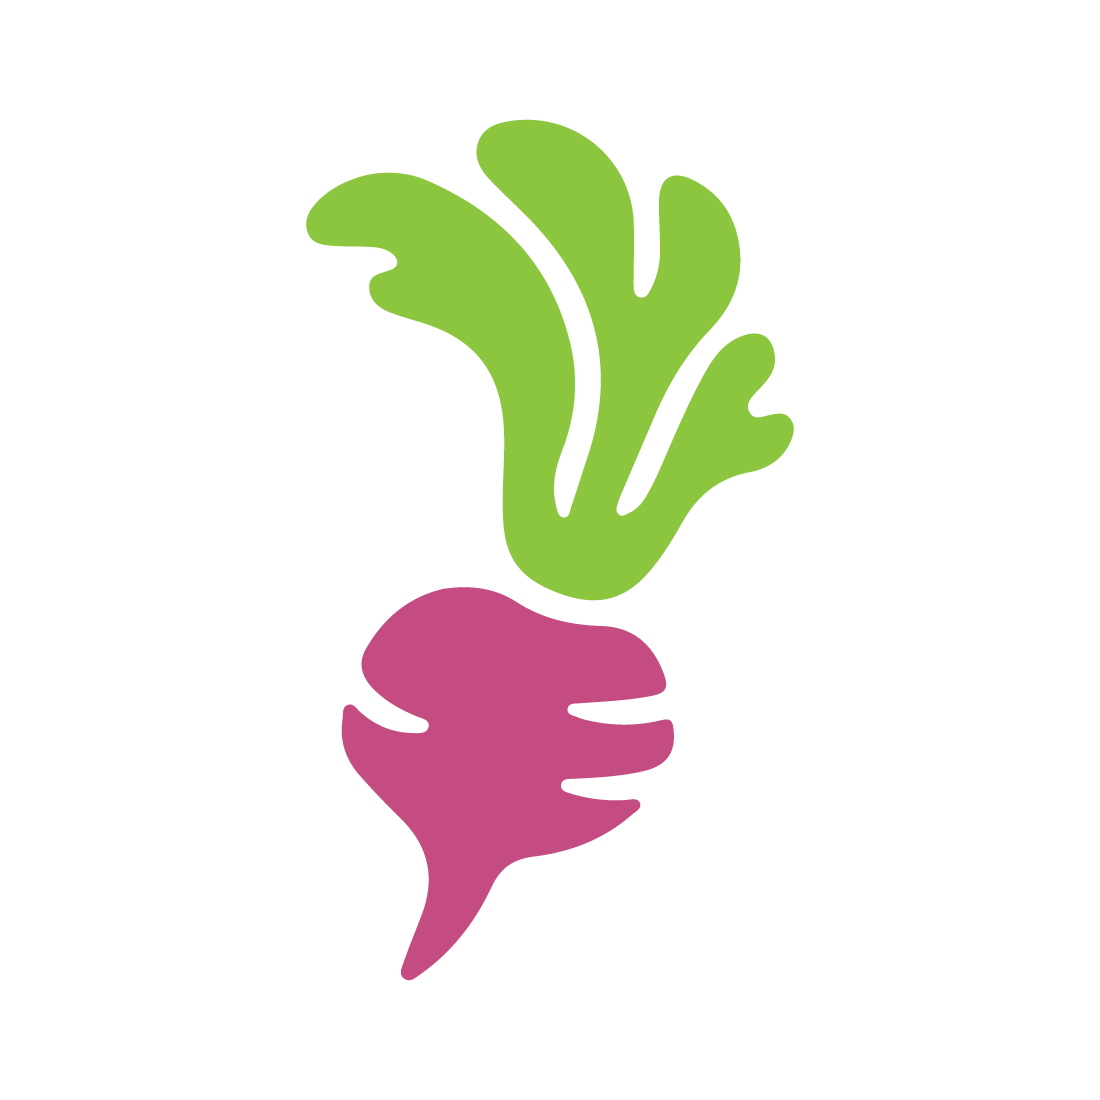 Vegetable icon logo design preview image.